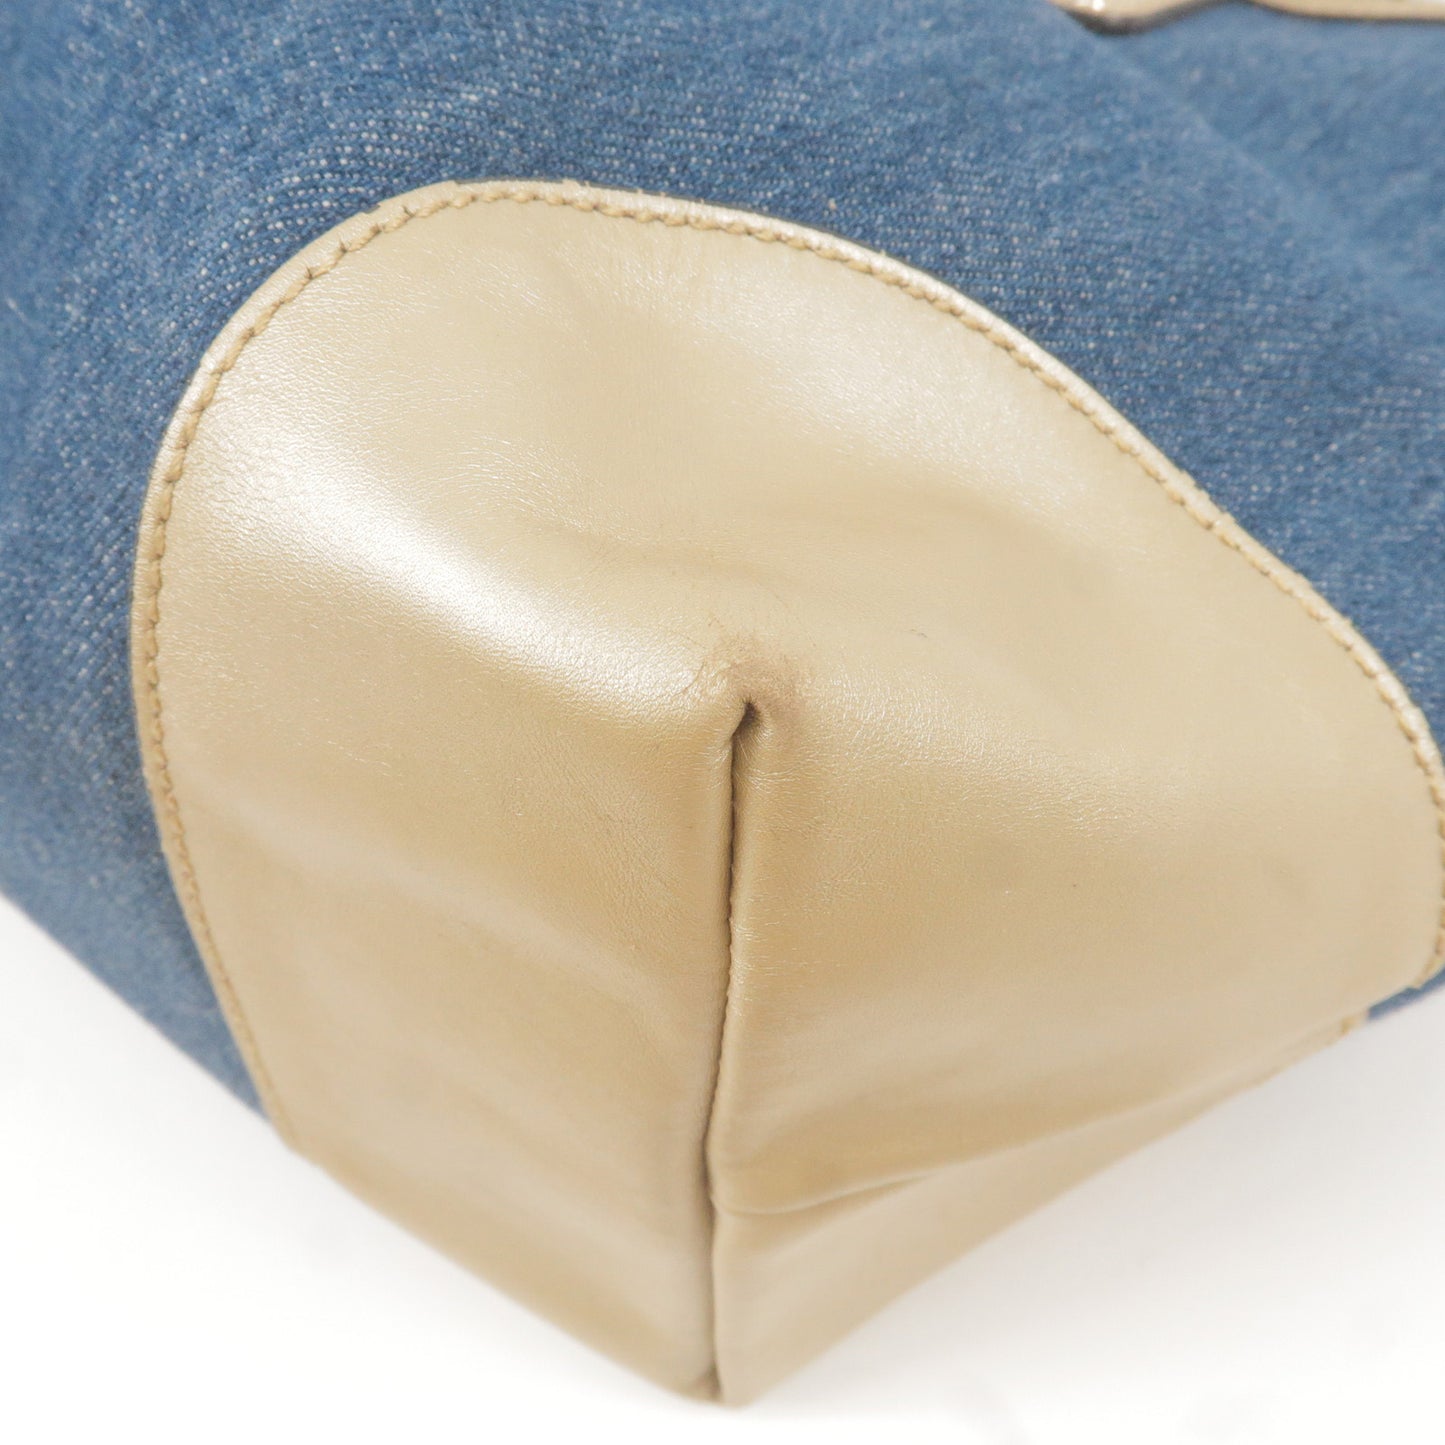 GUCCI Craft Denim Leather Tote Bag Japan limited Blue Gold 348715